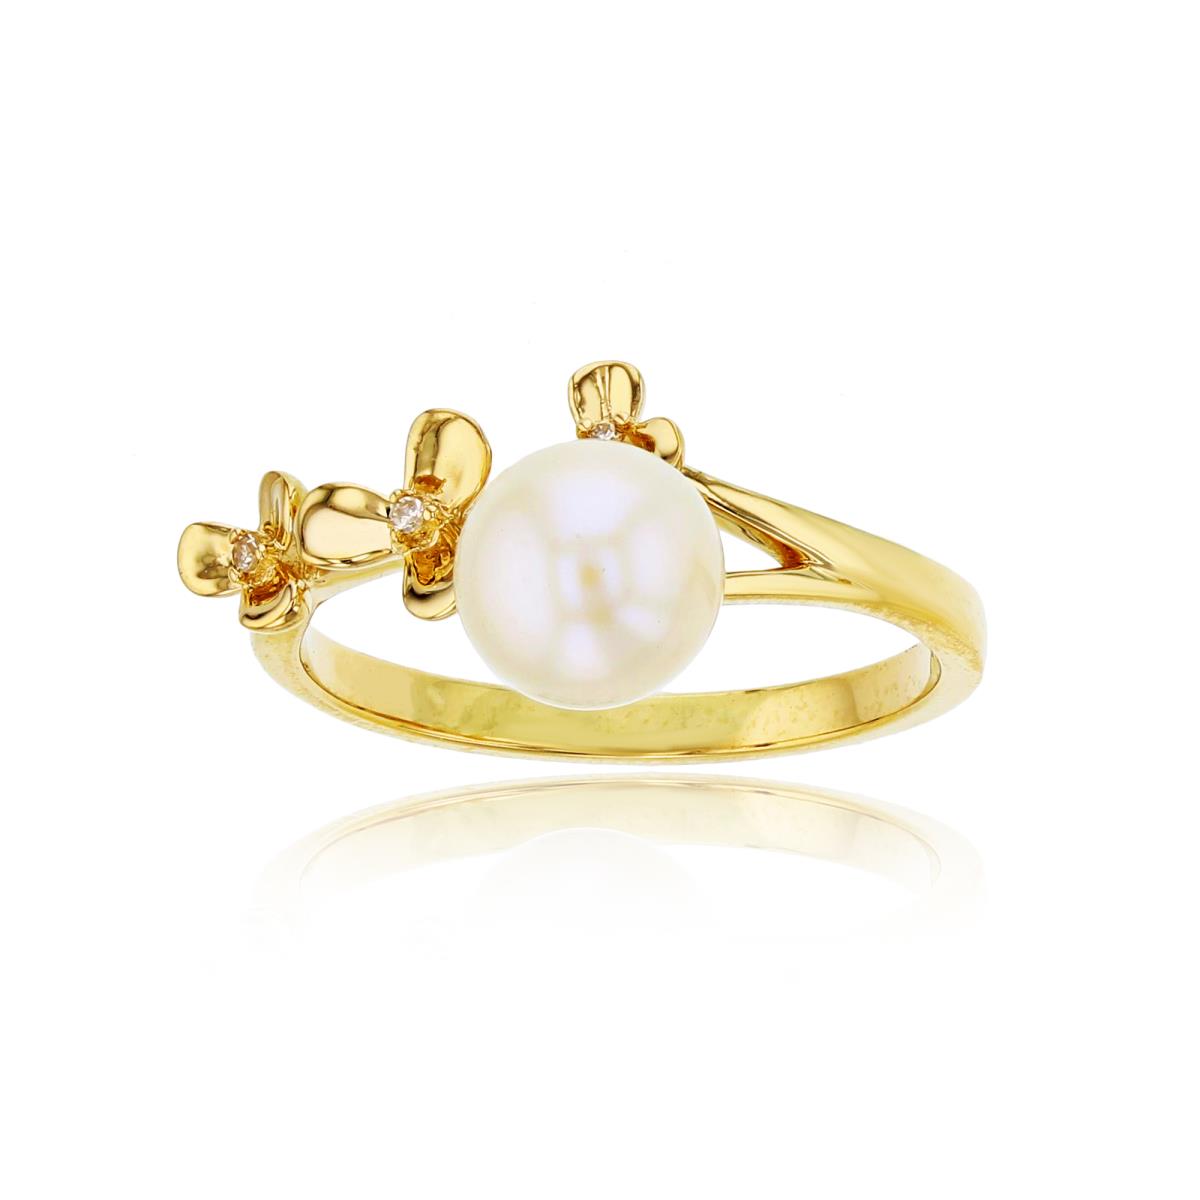 10K Yellow Gold 0.02 CTTW Rnd Diamonds & 7mm Rnd White Pearl Flower Ring